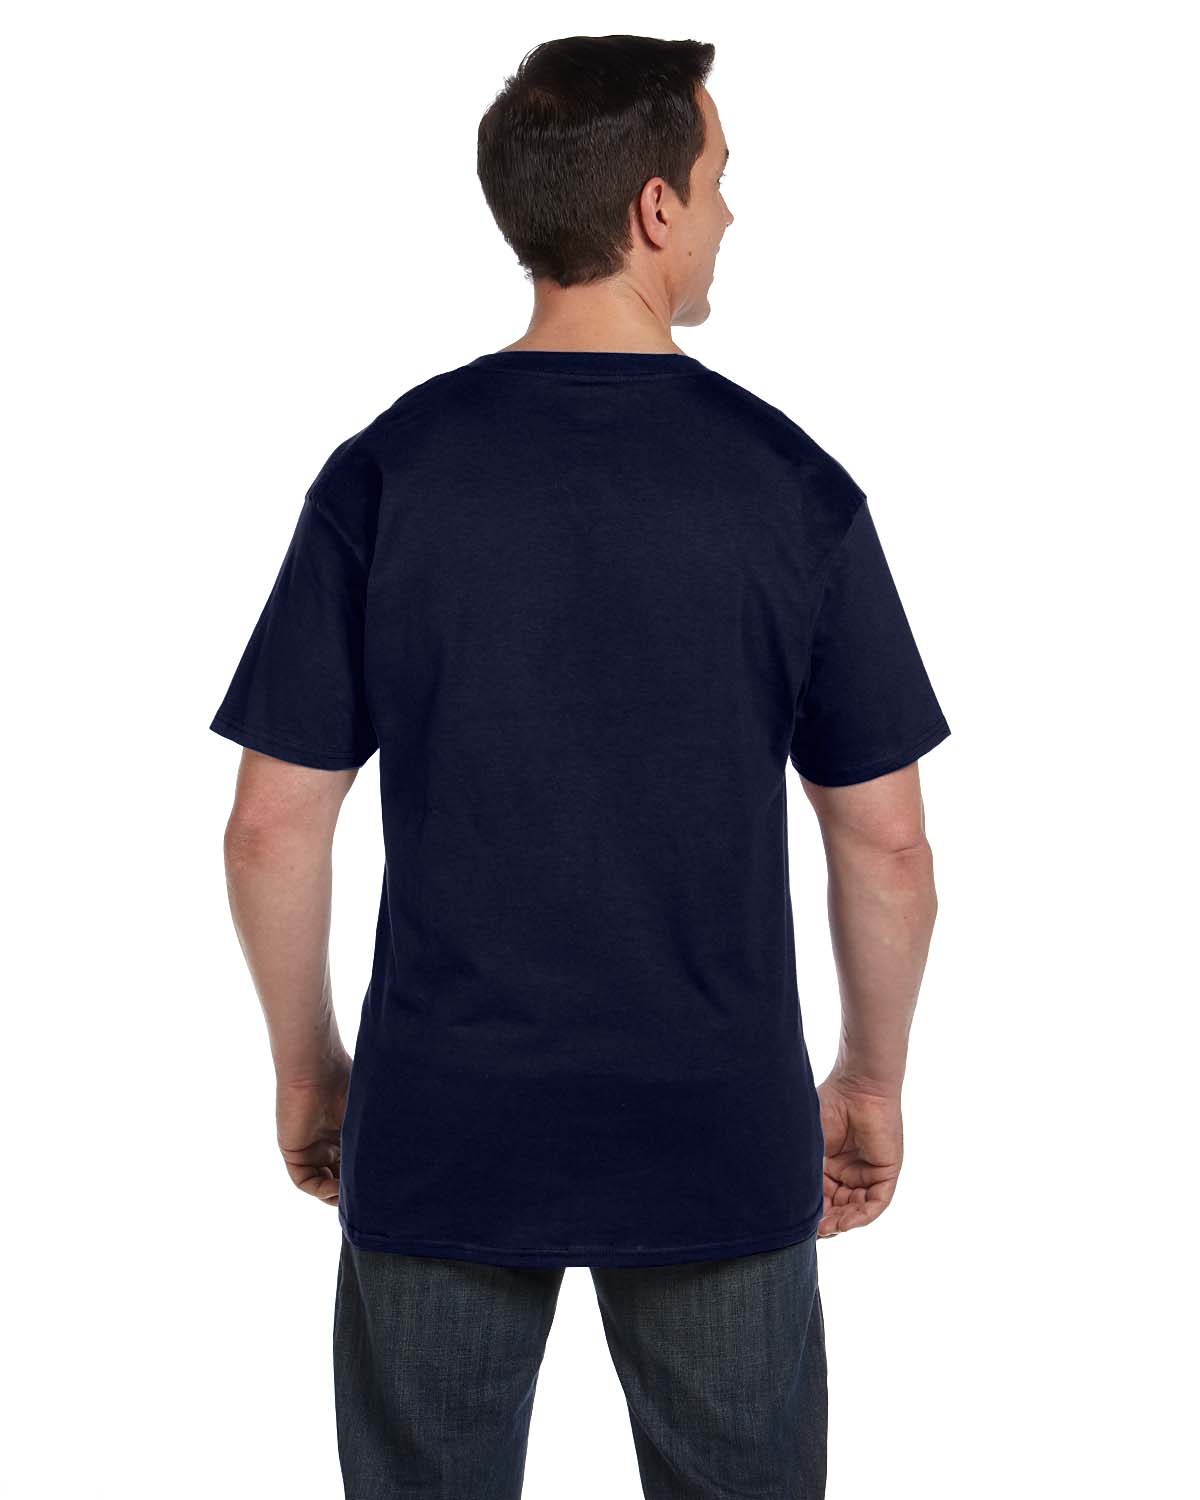 Hanes Mens Pocket T-Shirt 100% Heavy Cotton 6.1 oz Beefy Tee S-XL 5190P ...